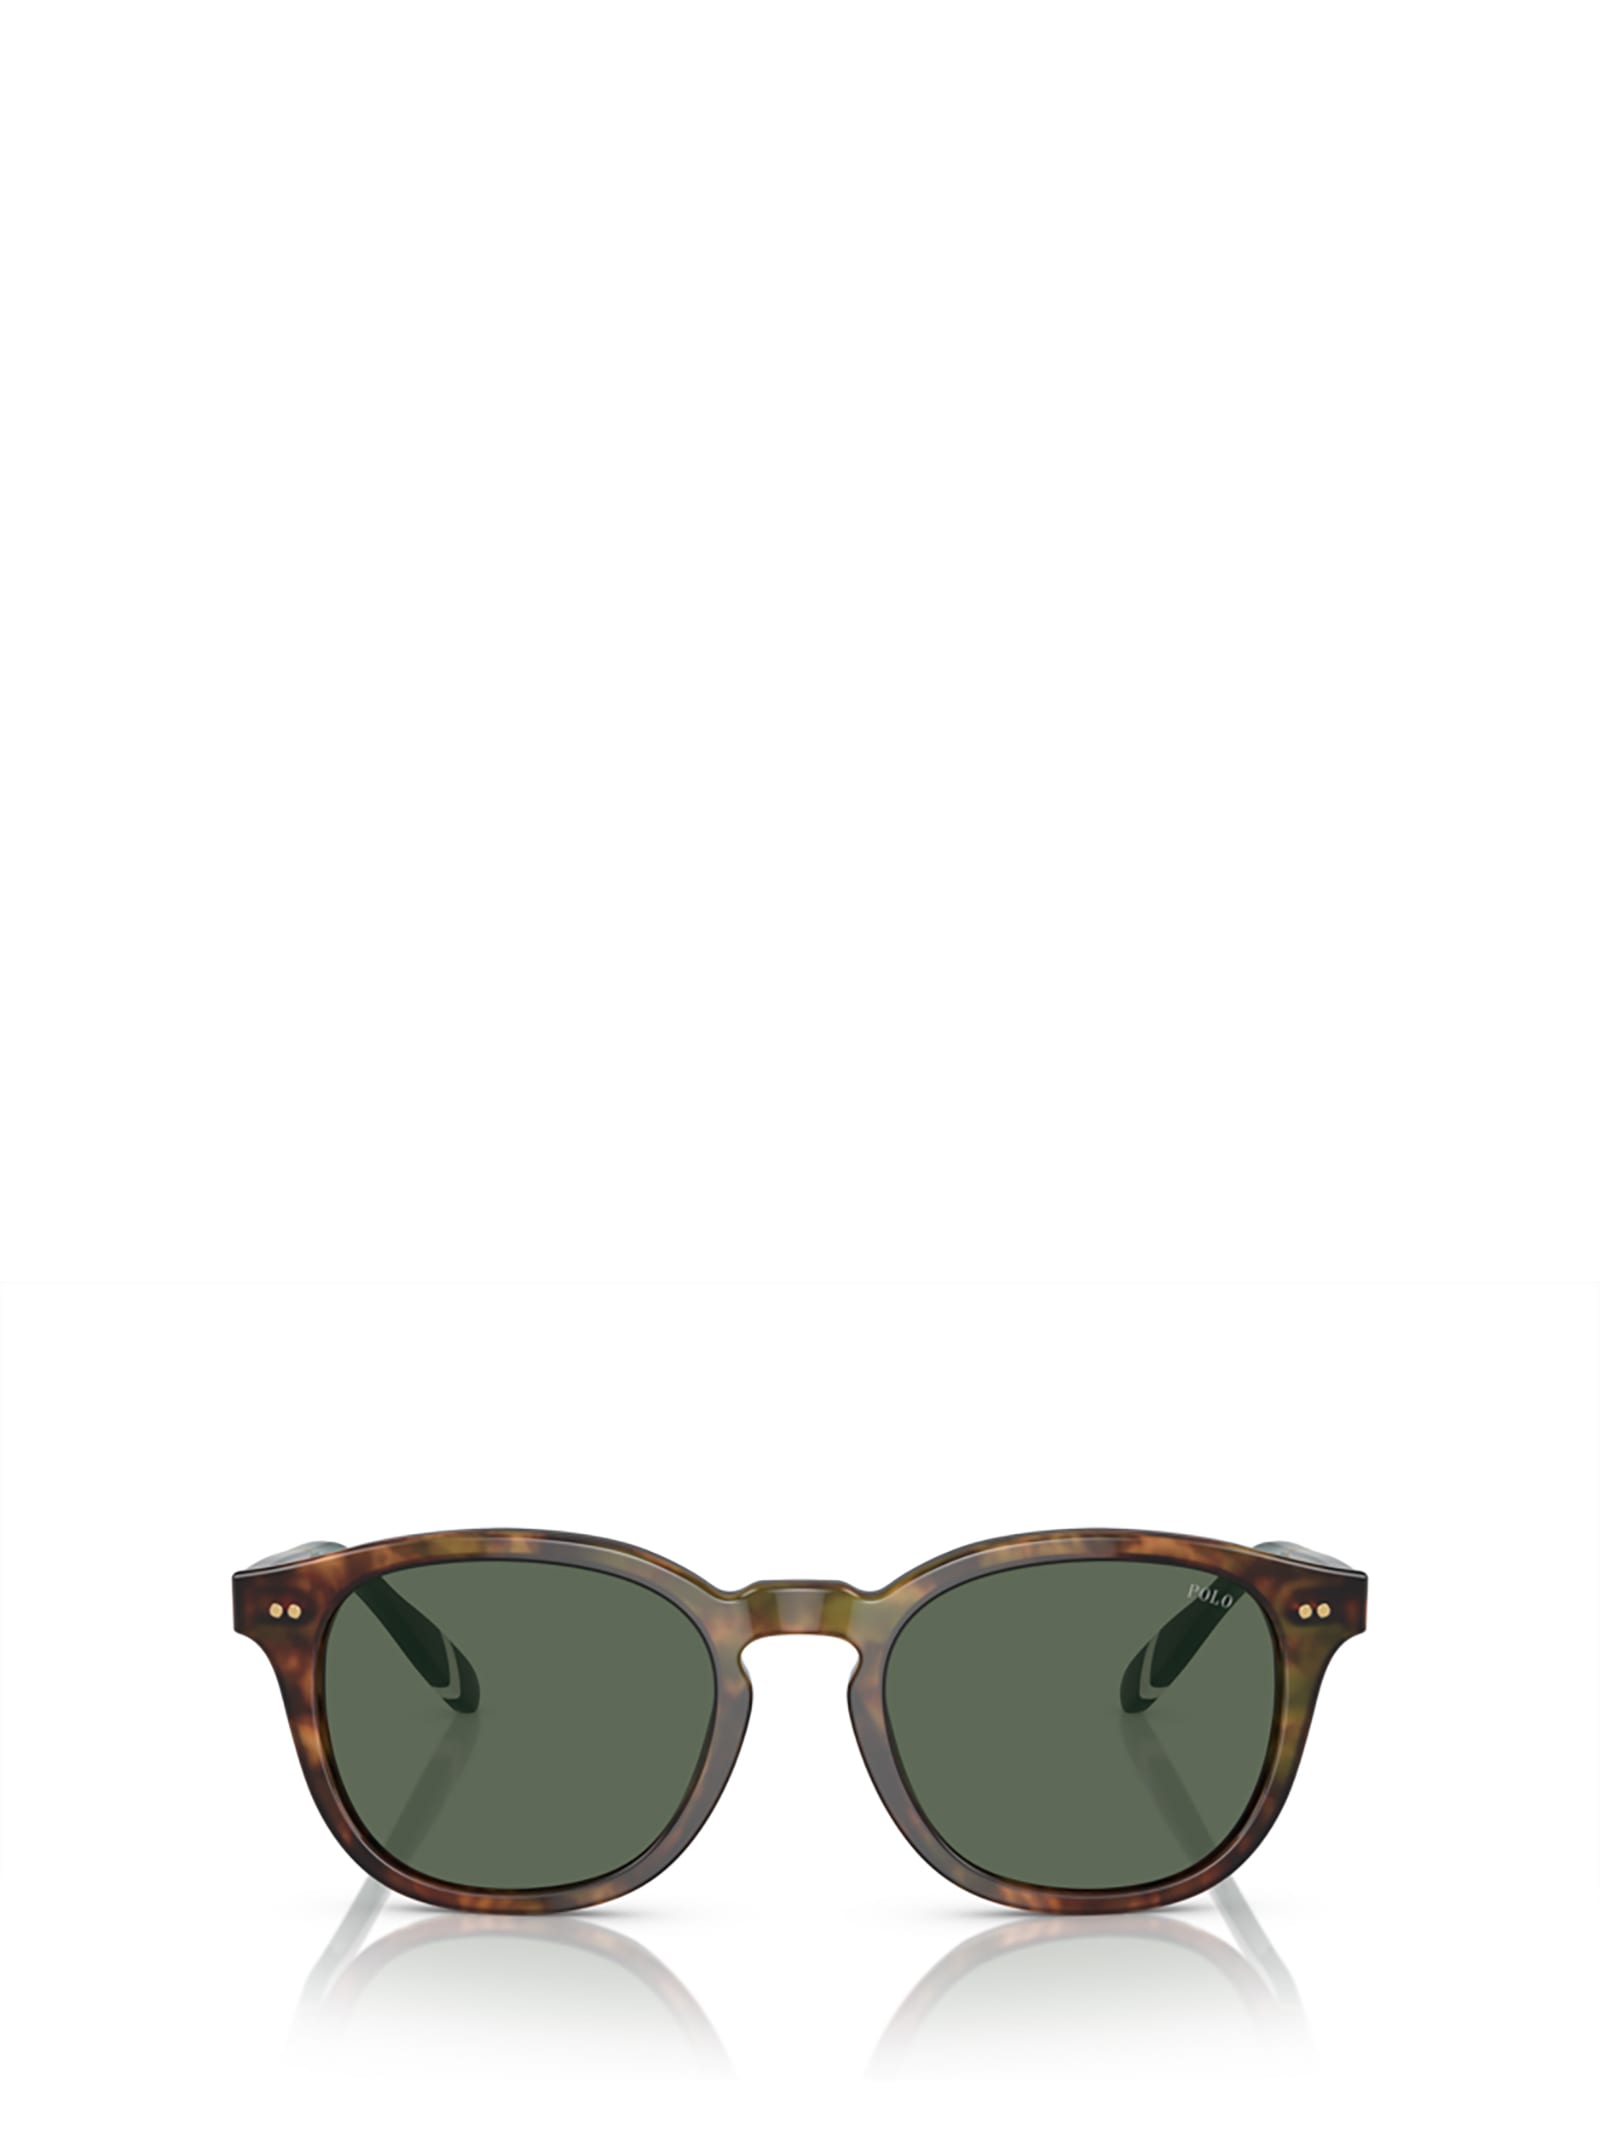 Polo Ralph Lauren Ph4206 Shiny Brown Tortoise Sunglasses